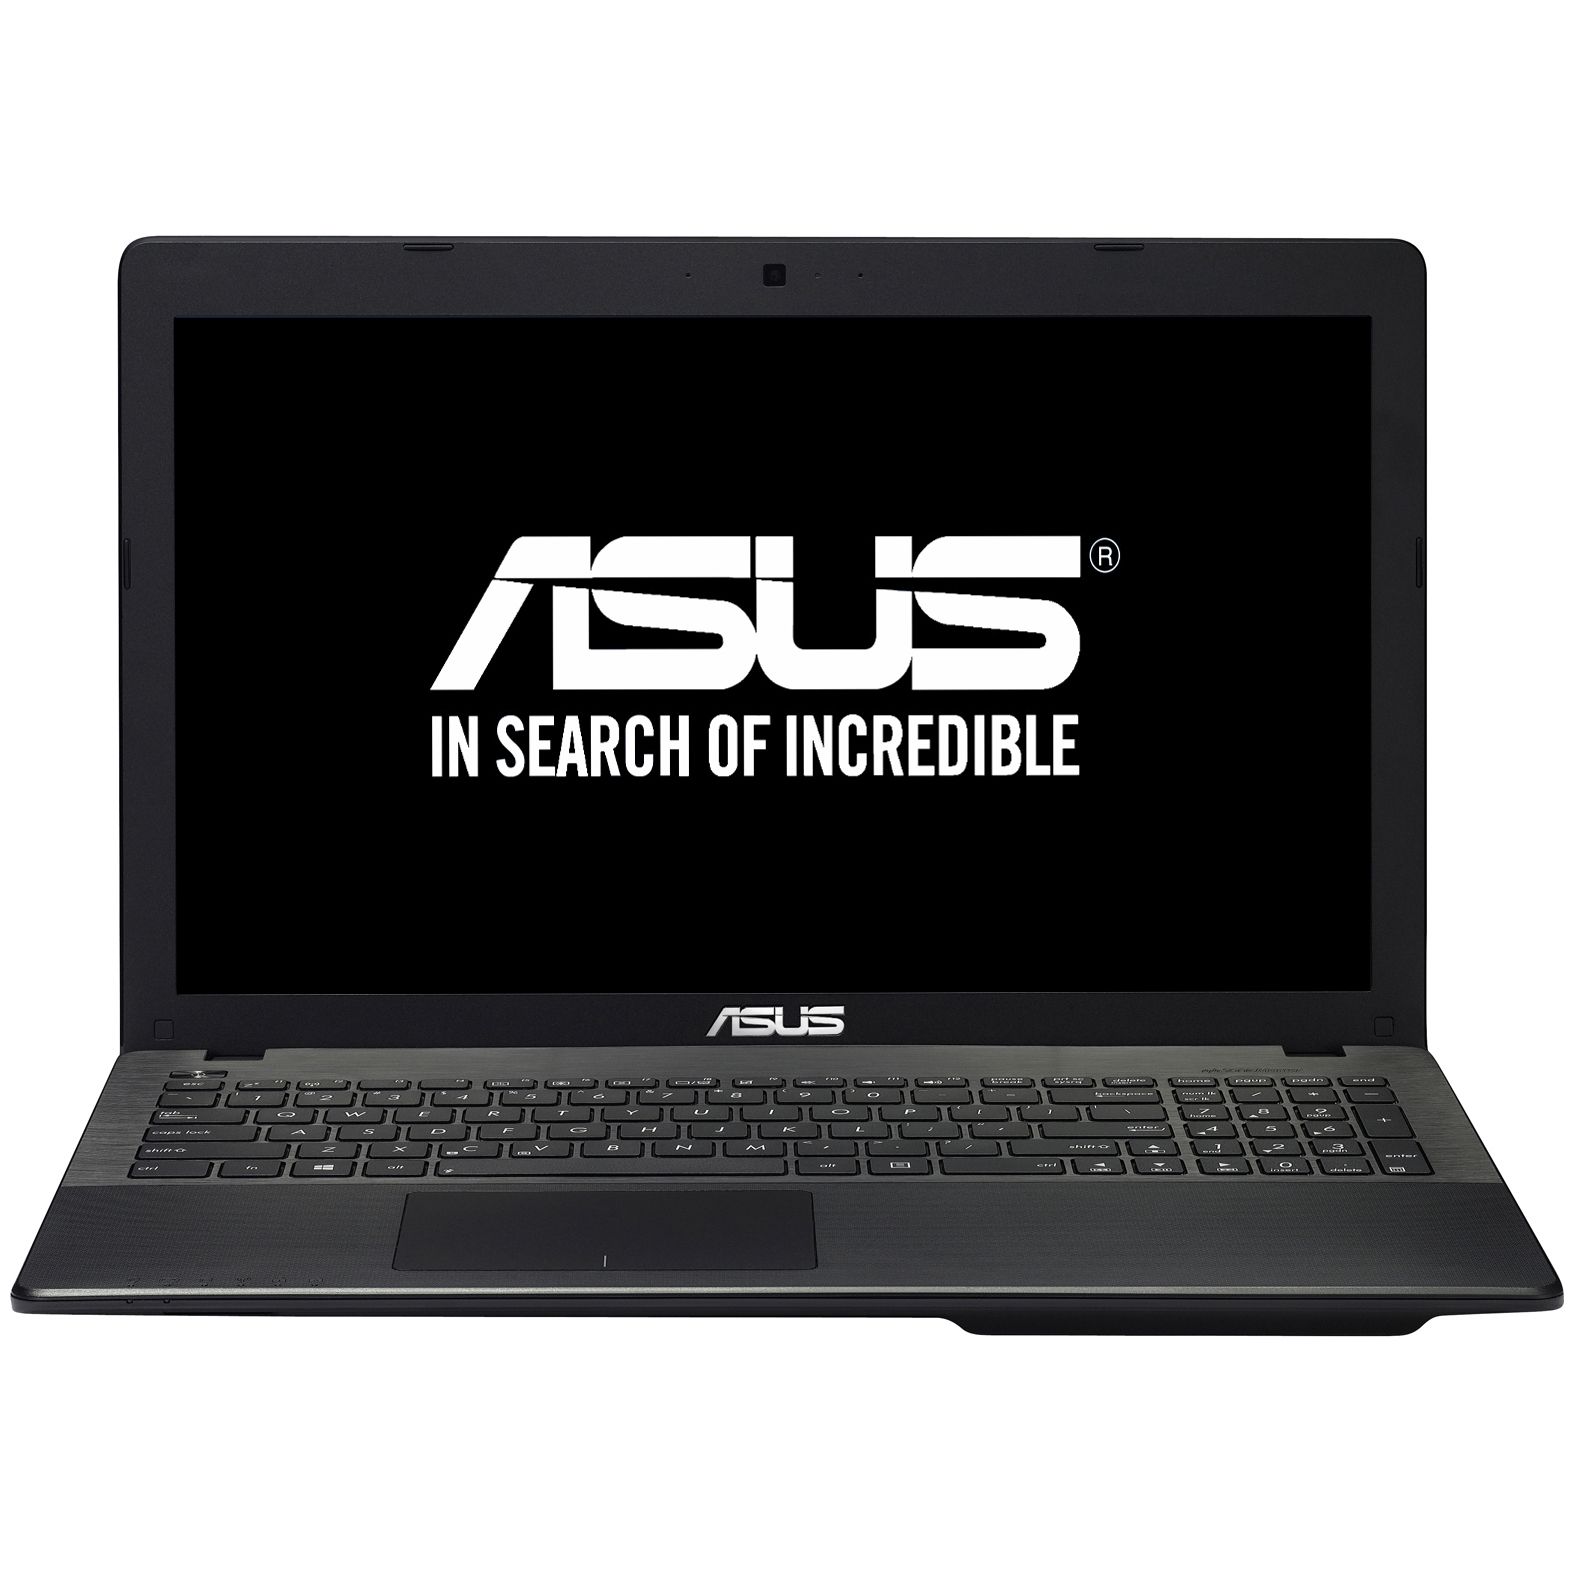  Laptop Asus X553MA-XX432D, Intel Celeron N2940, 4GB DDR3 HDD 500GB, Intel HD Graphics, Free DOS 